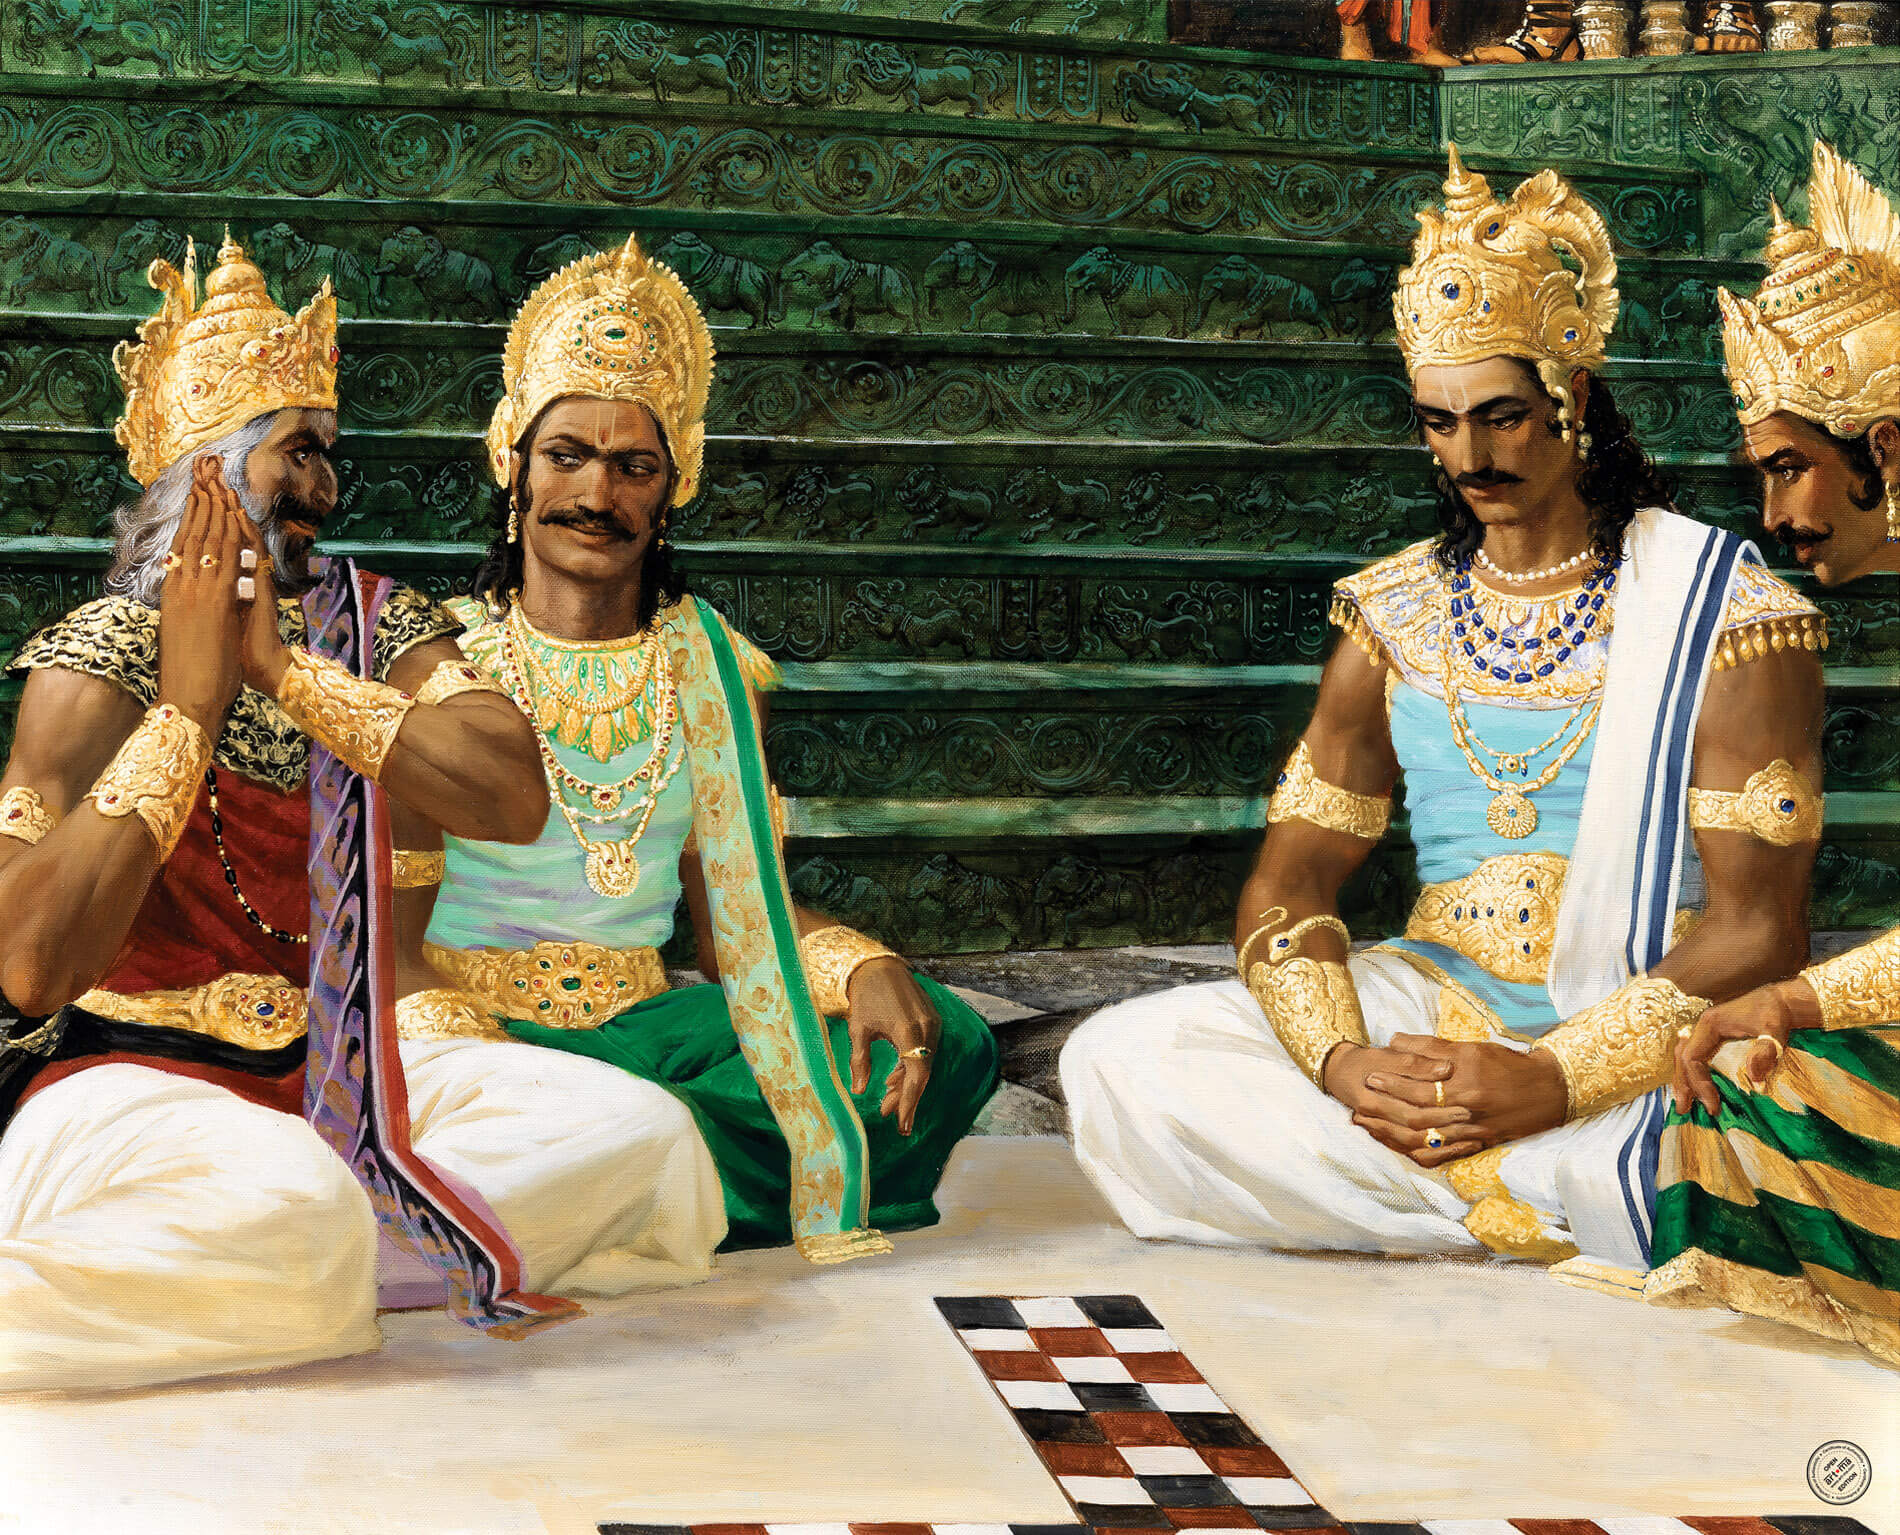 Mahabharata - The Pandavas were cheated